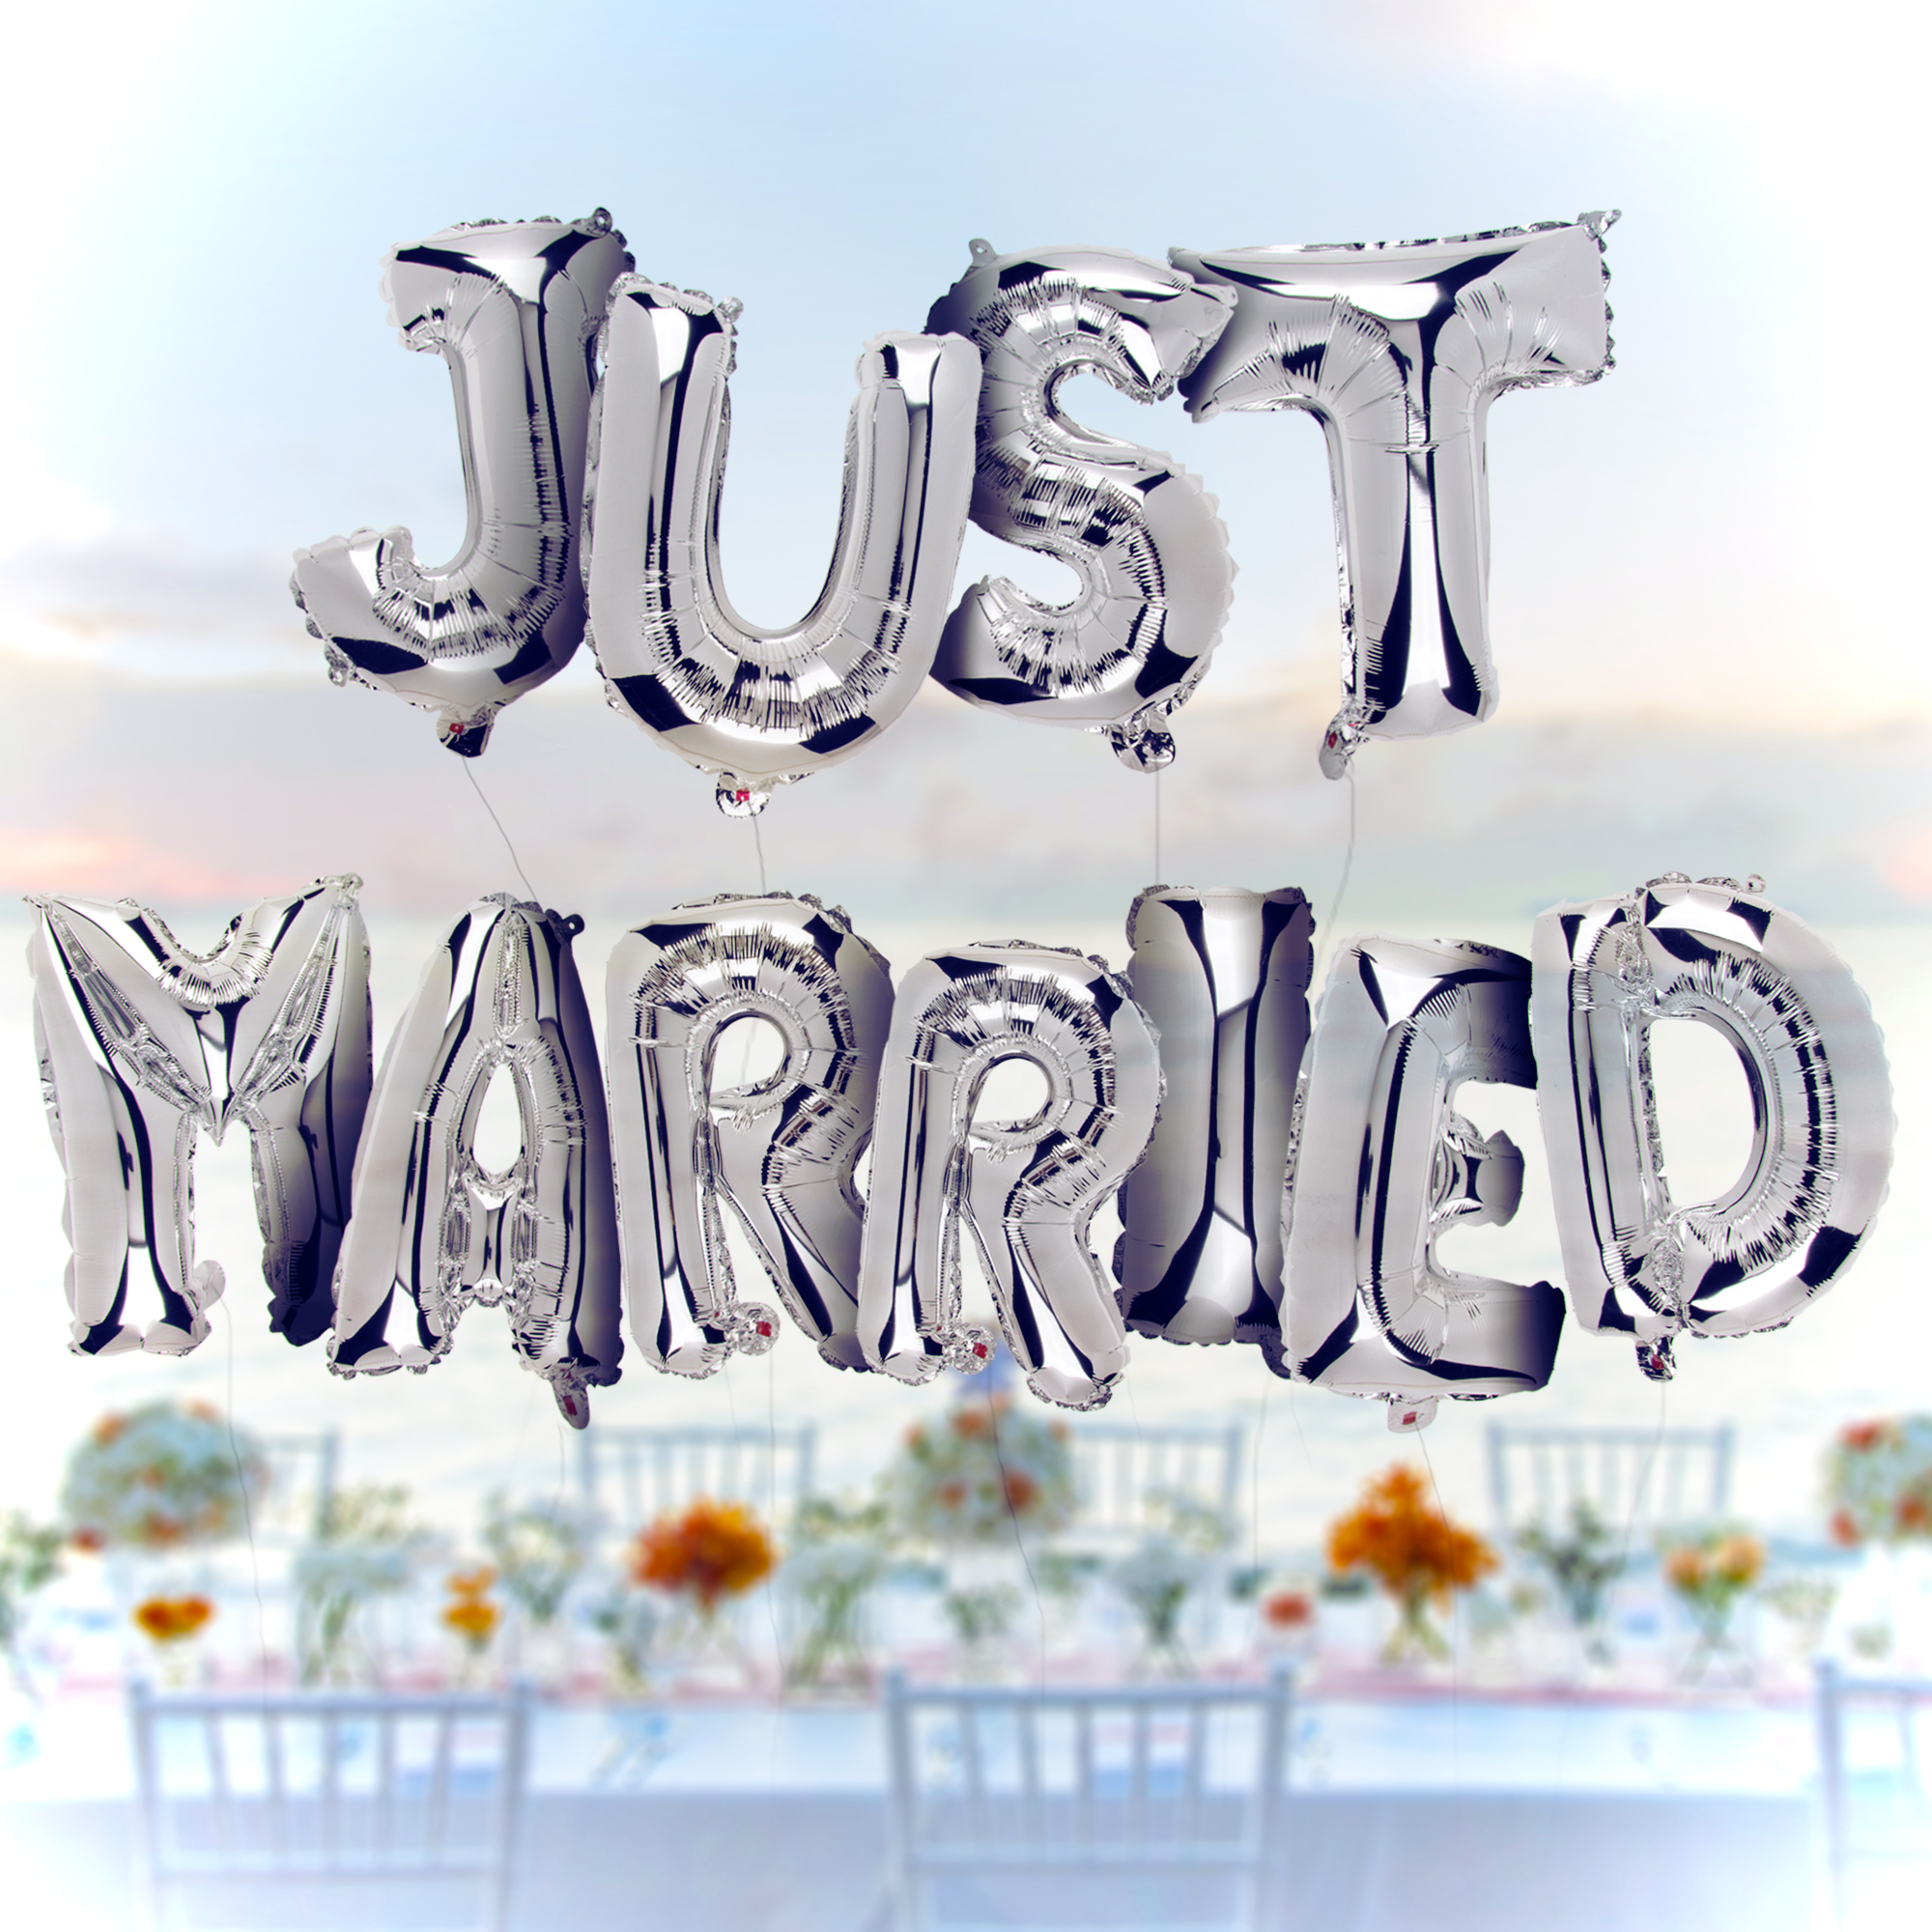 Hochzeitsballons - Just Married 3836